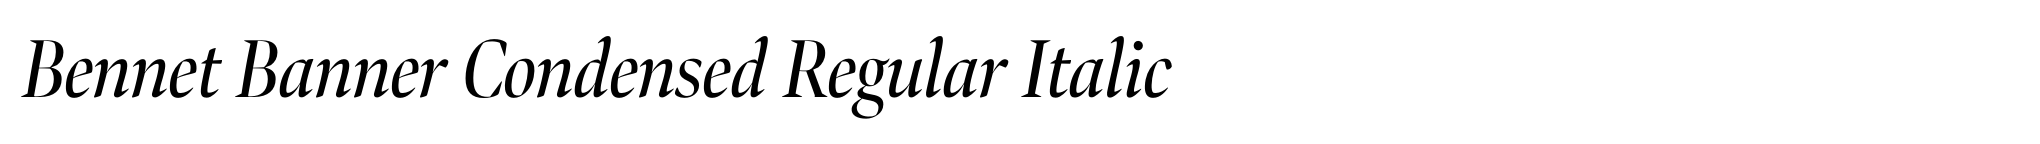 Bennet Banner Condensed Regular Italic image